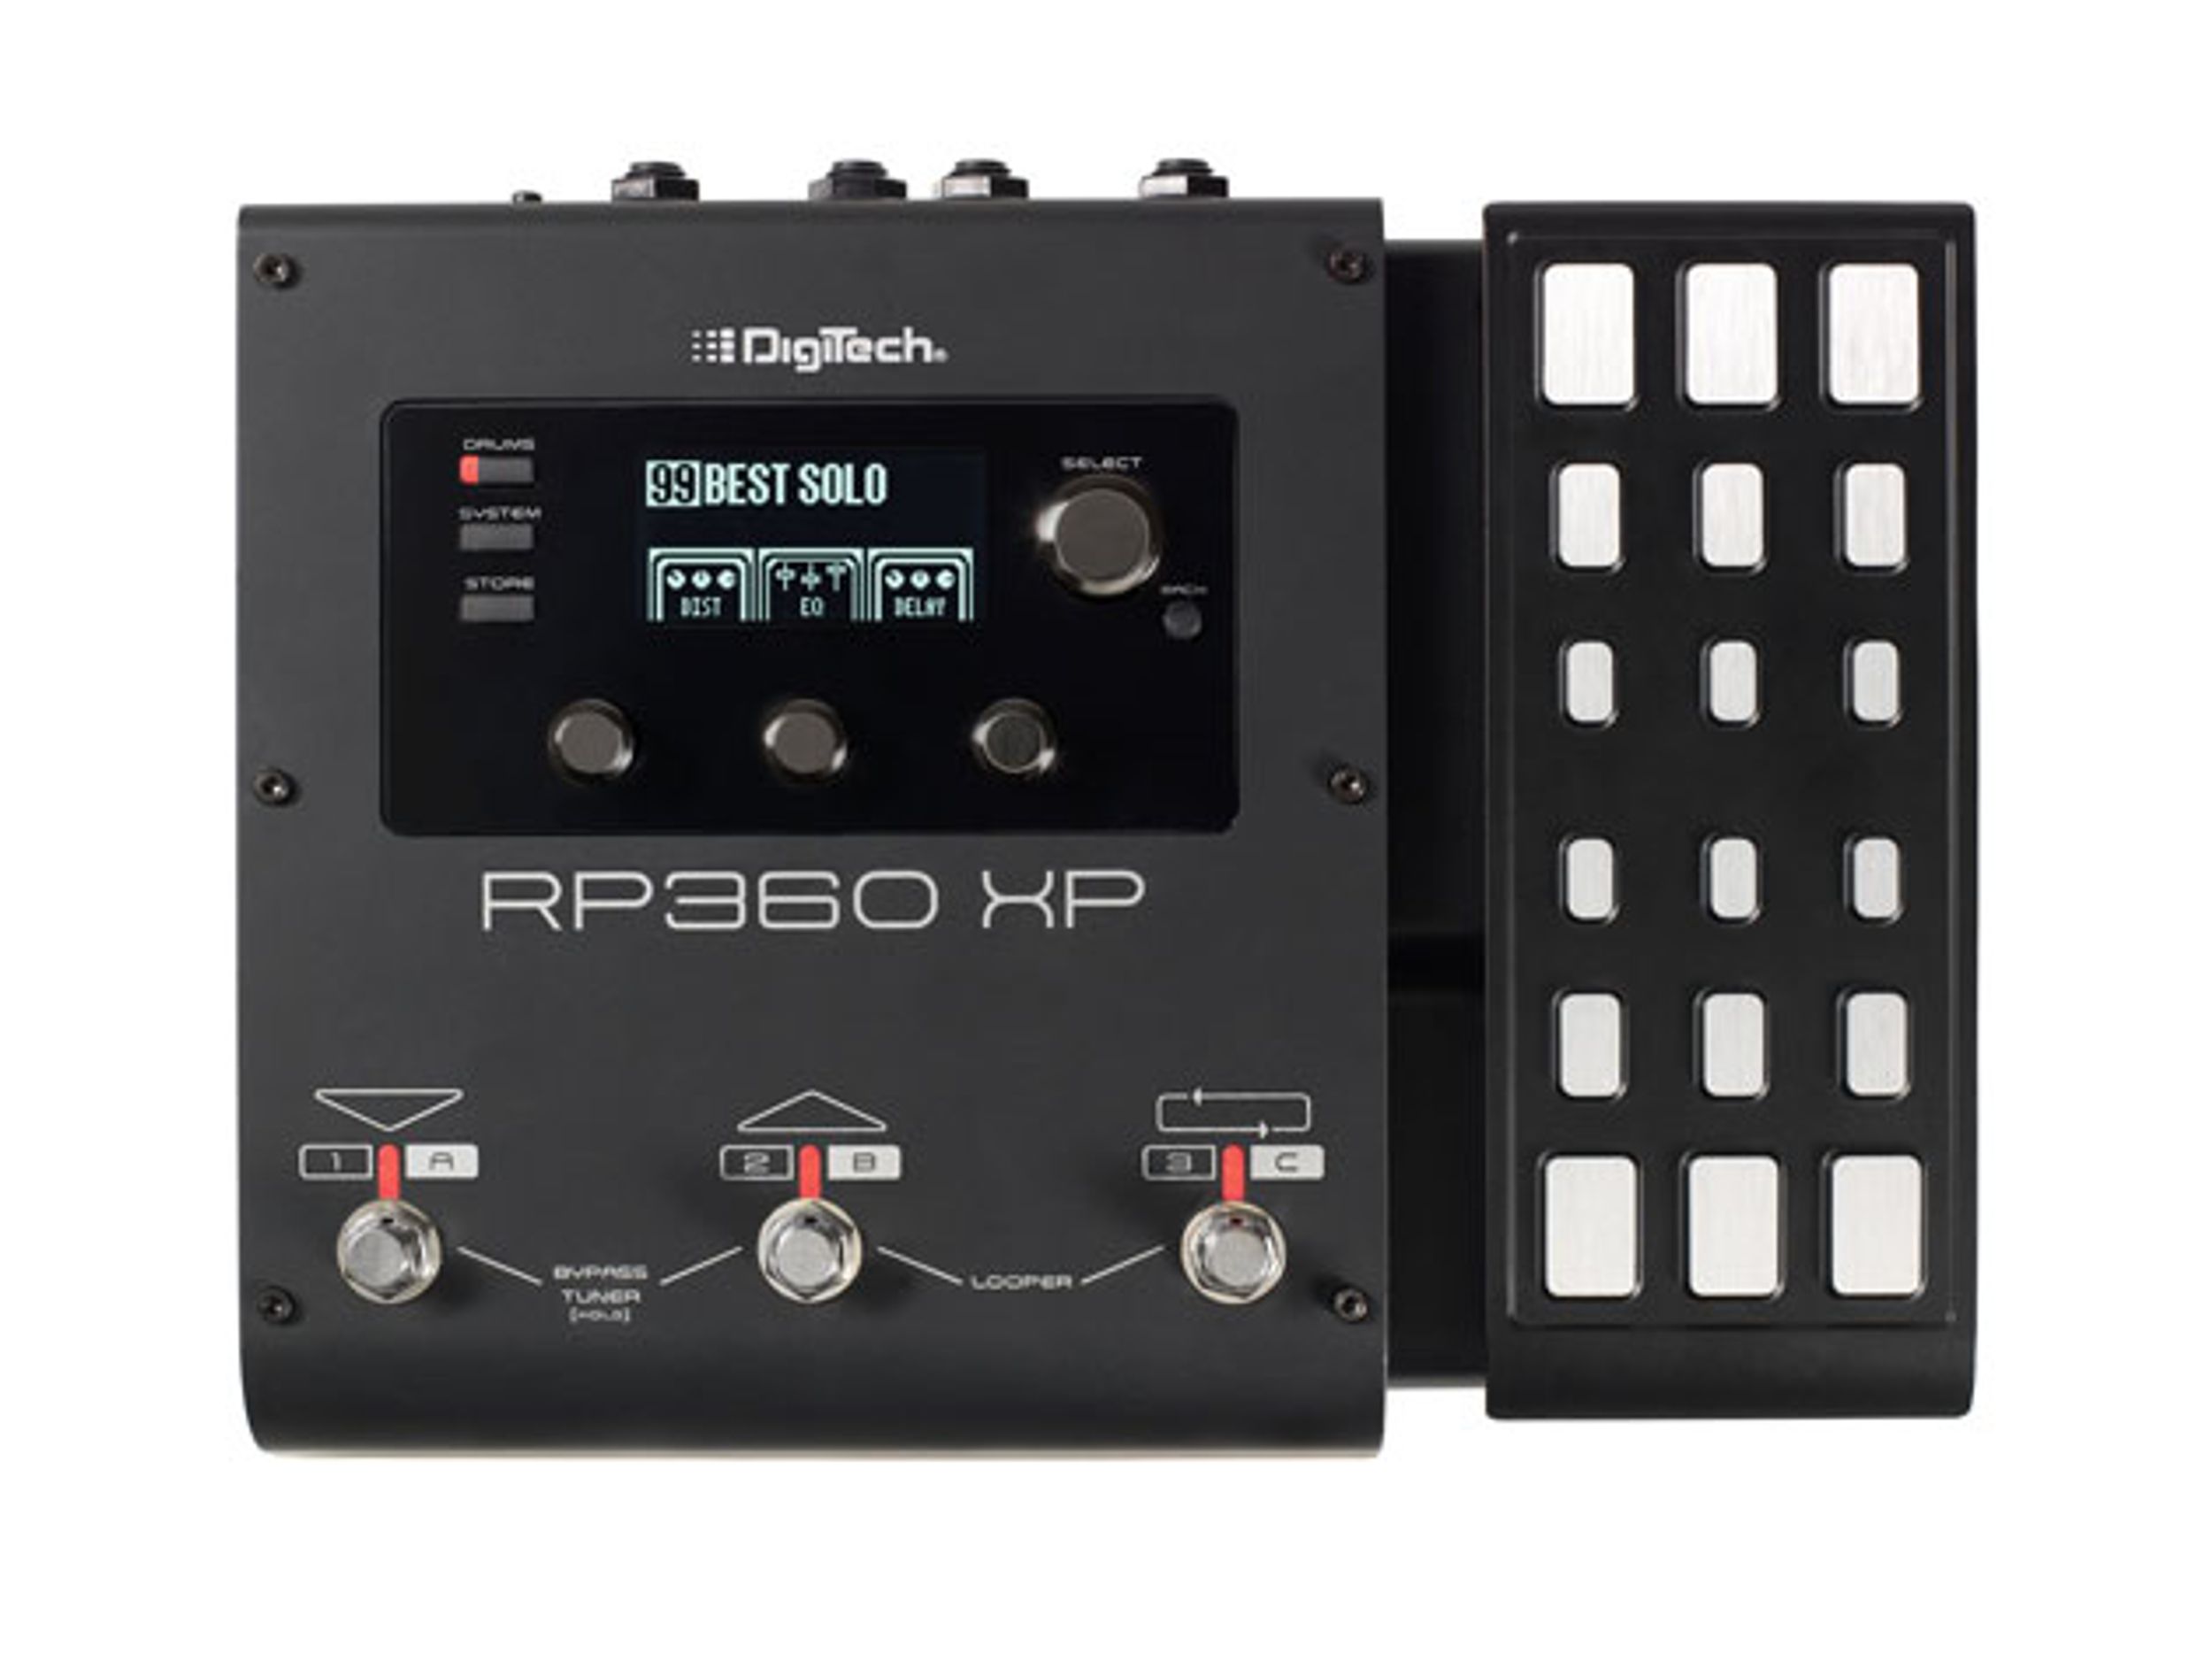 DigiTech Announces RP360 and RP 360 XP Multi Effects Pedals